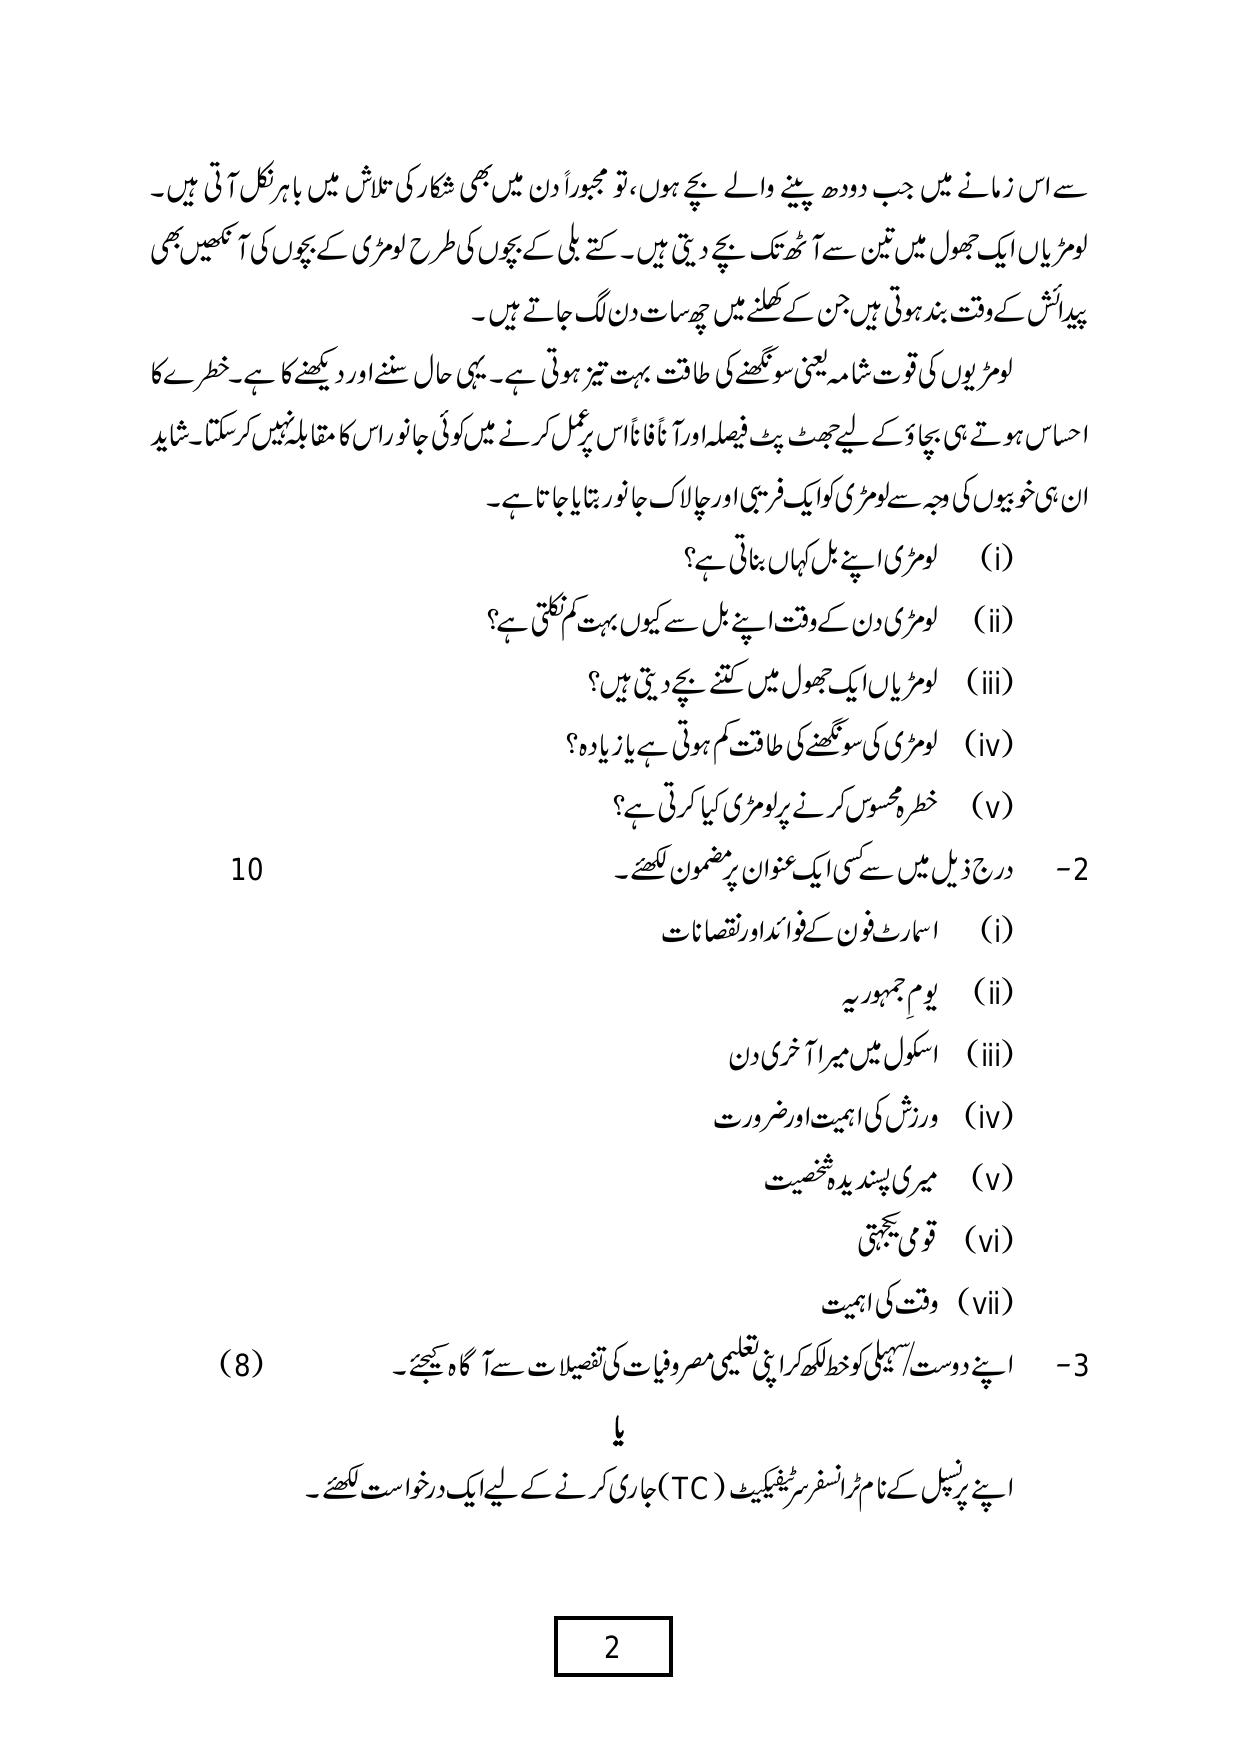 CBSE Class 12 Urdu Core -Sample Paper 2019-20 - Page 2